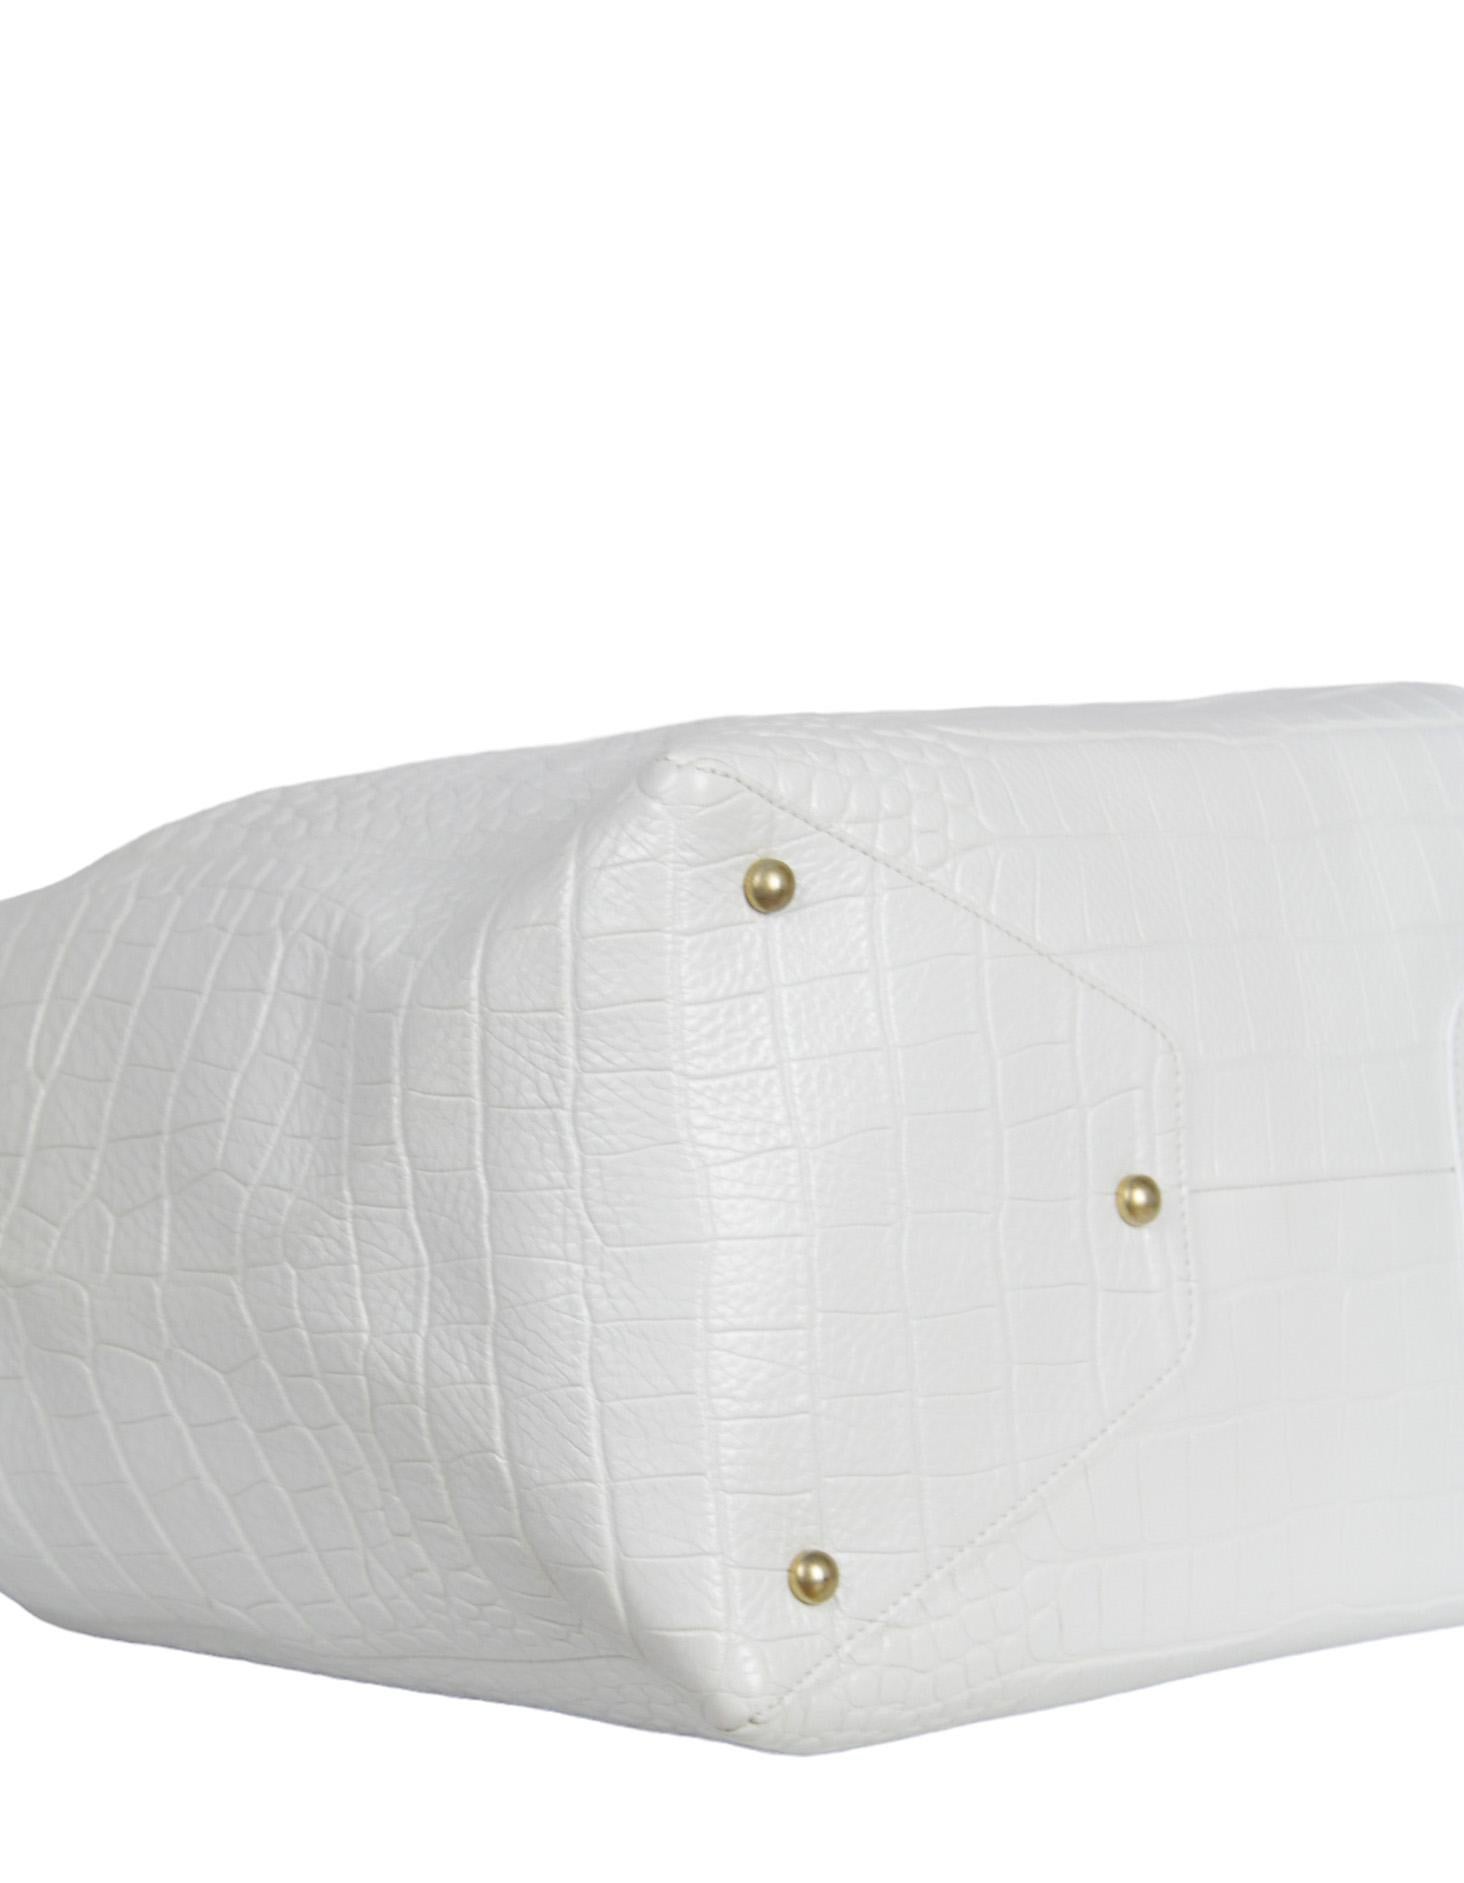 Chanel White Embossed Crocodile Paris-New York Large Coco Tote Bag 2